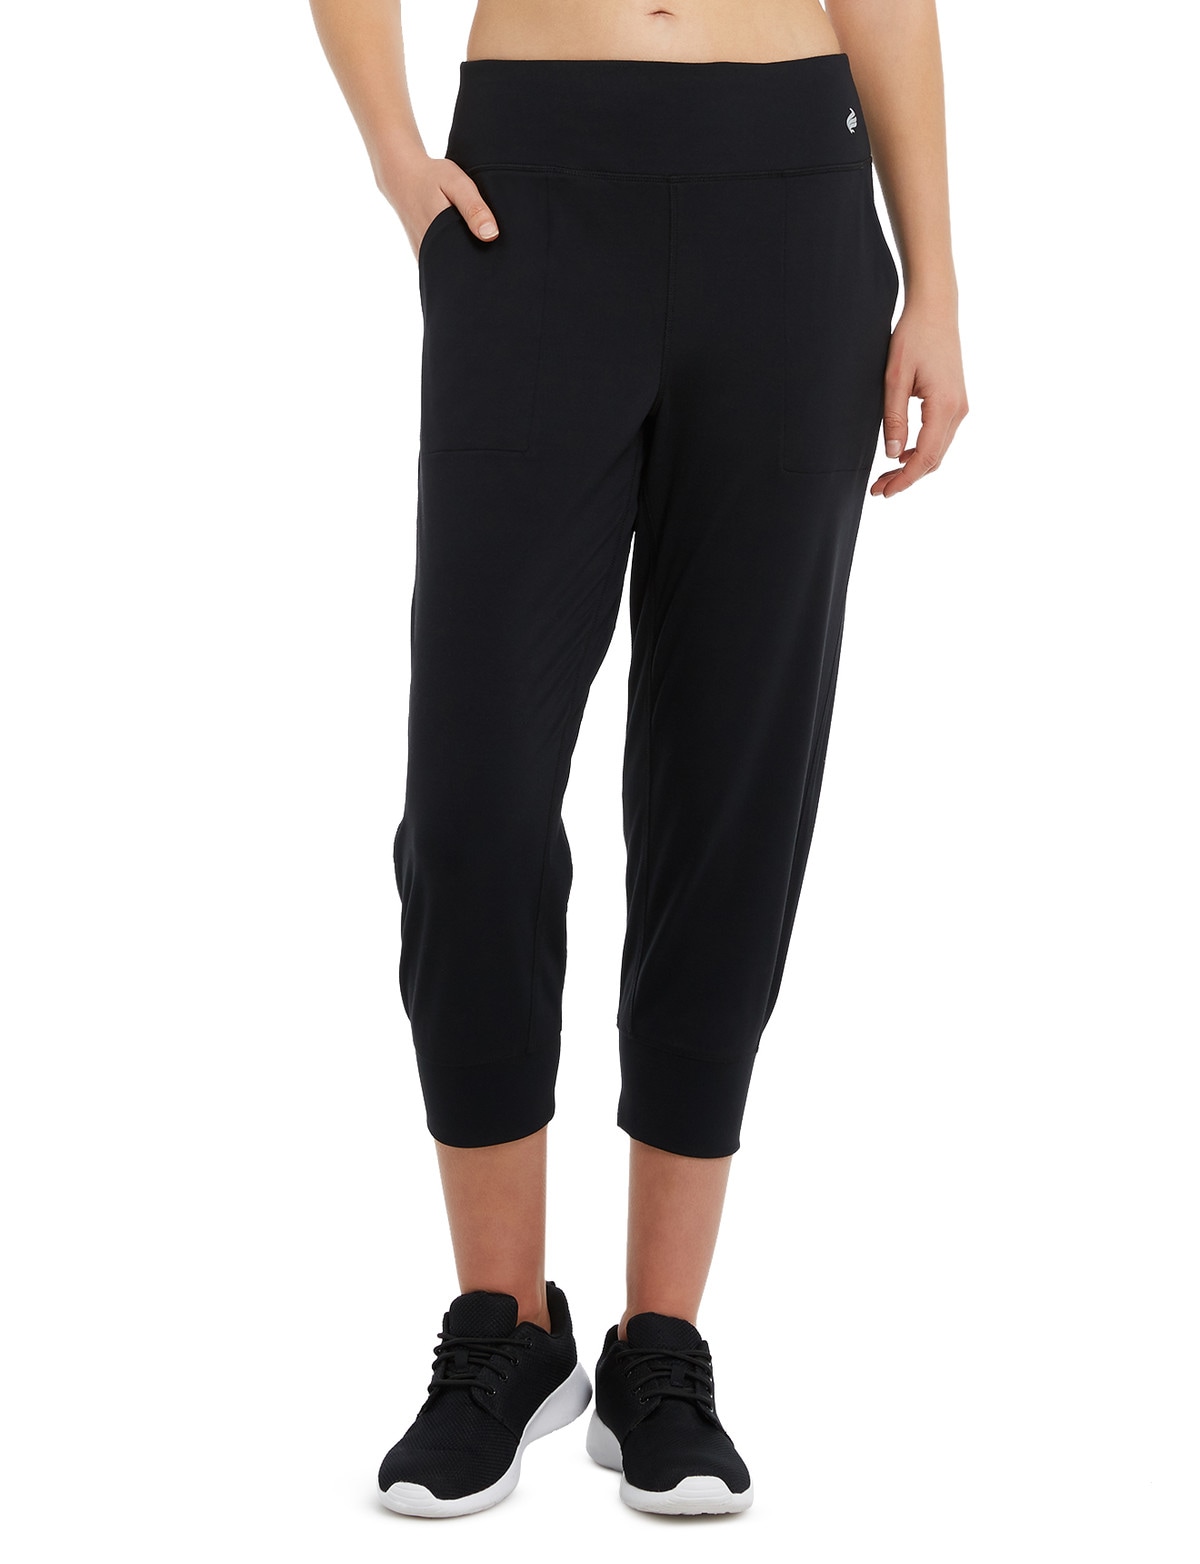 Superfit Cropped Jogger Pant, Black - Activewear